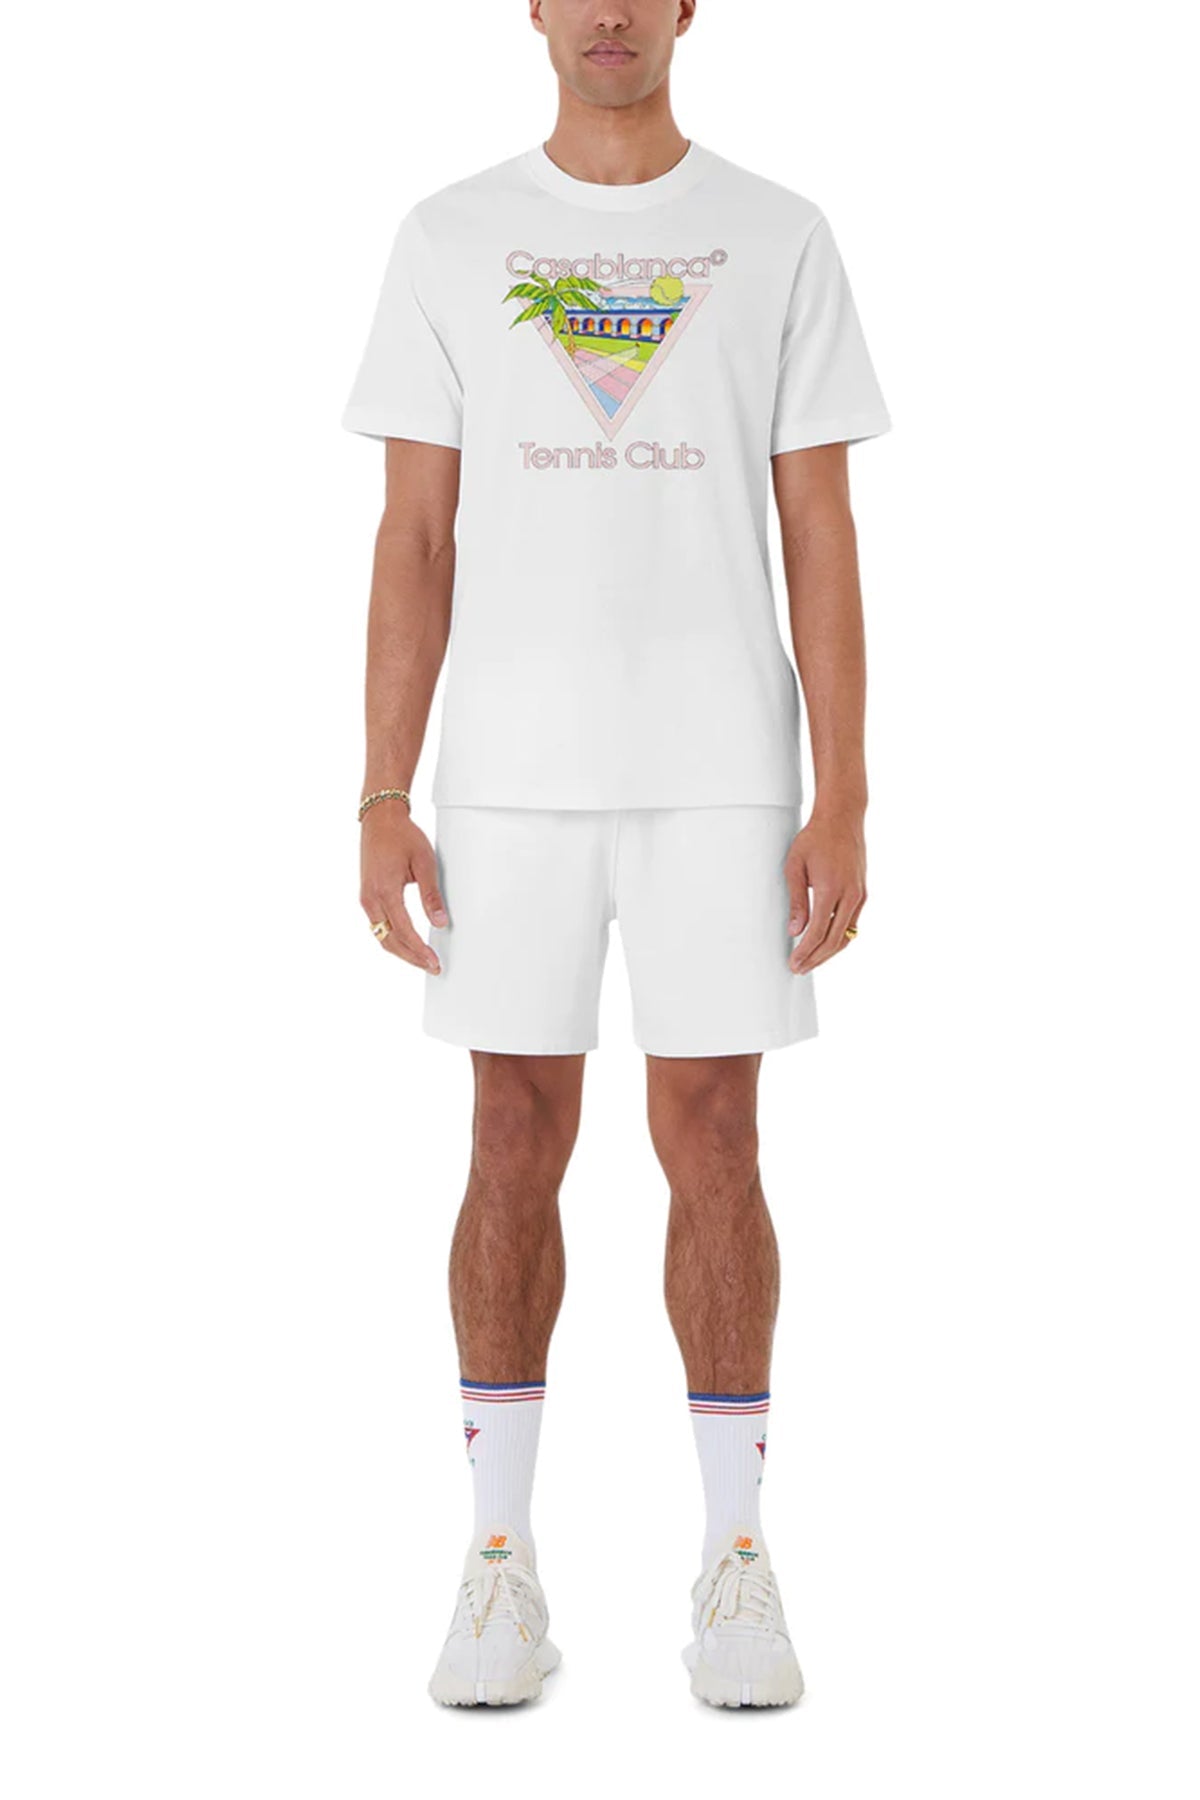 Tennis Club Icon Unisex T-Shirt in White - shop-olivia.com